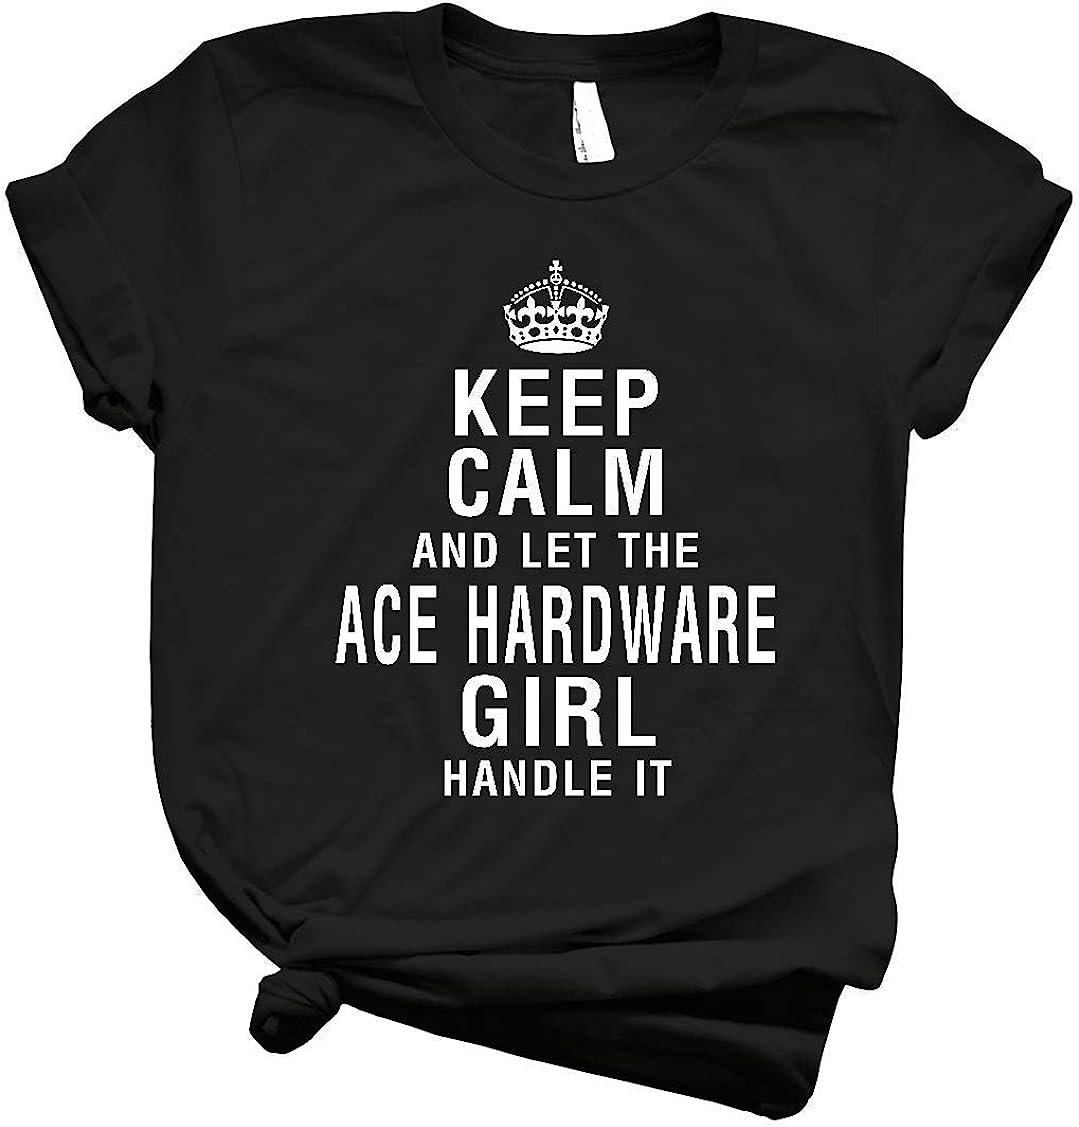 Ace Hardware Shirt Keep Calm And Let Ace Hardware GirlHandle It Hoodies Sweatshirts Hoodies Sweatshirts